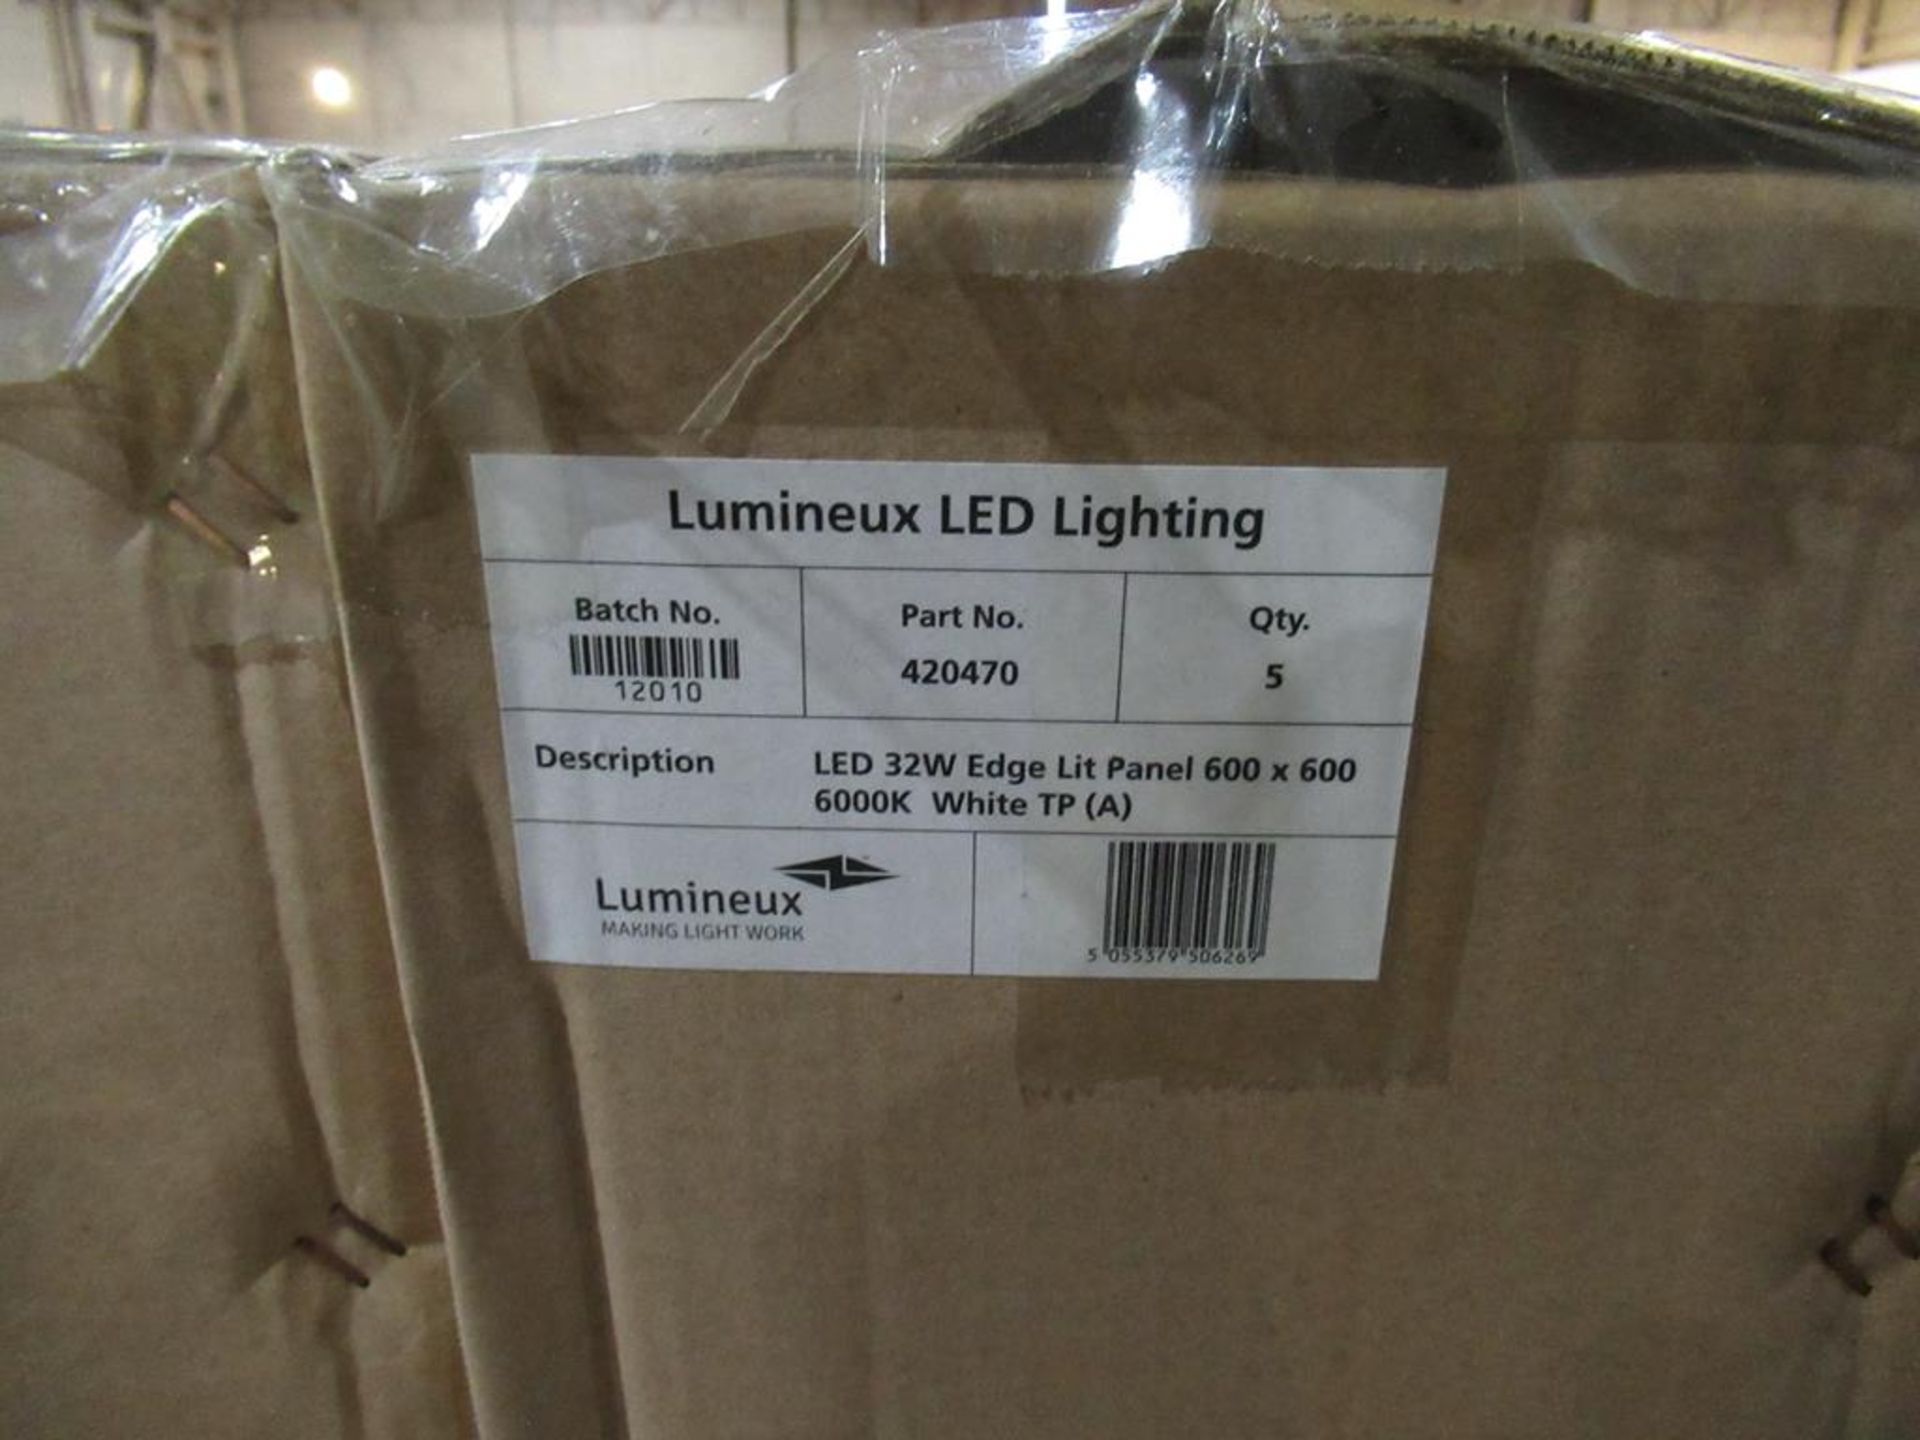 20 x LED 32W Edge Lit Panel 600x600 TP(a) White OEM Trade Price £440 - Image 3 of 3